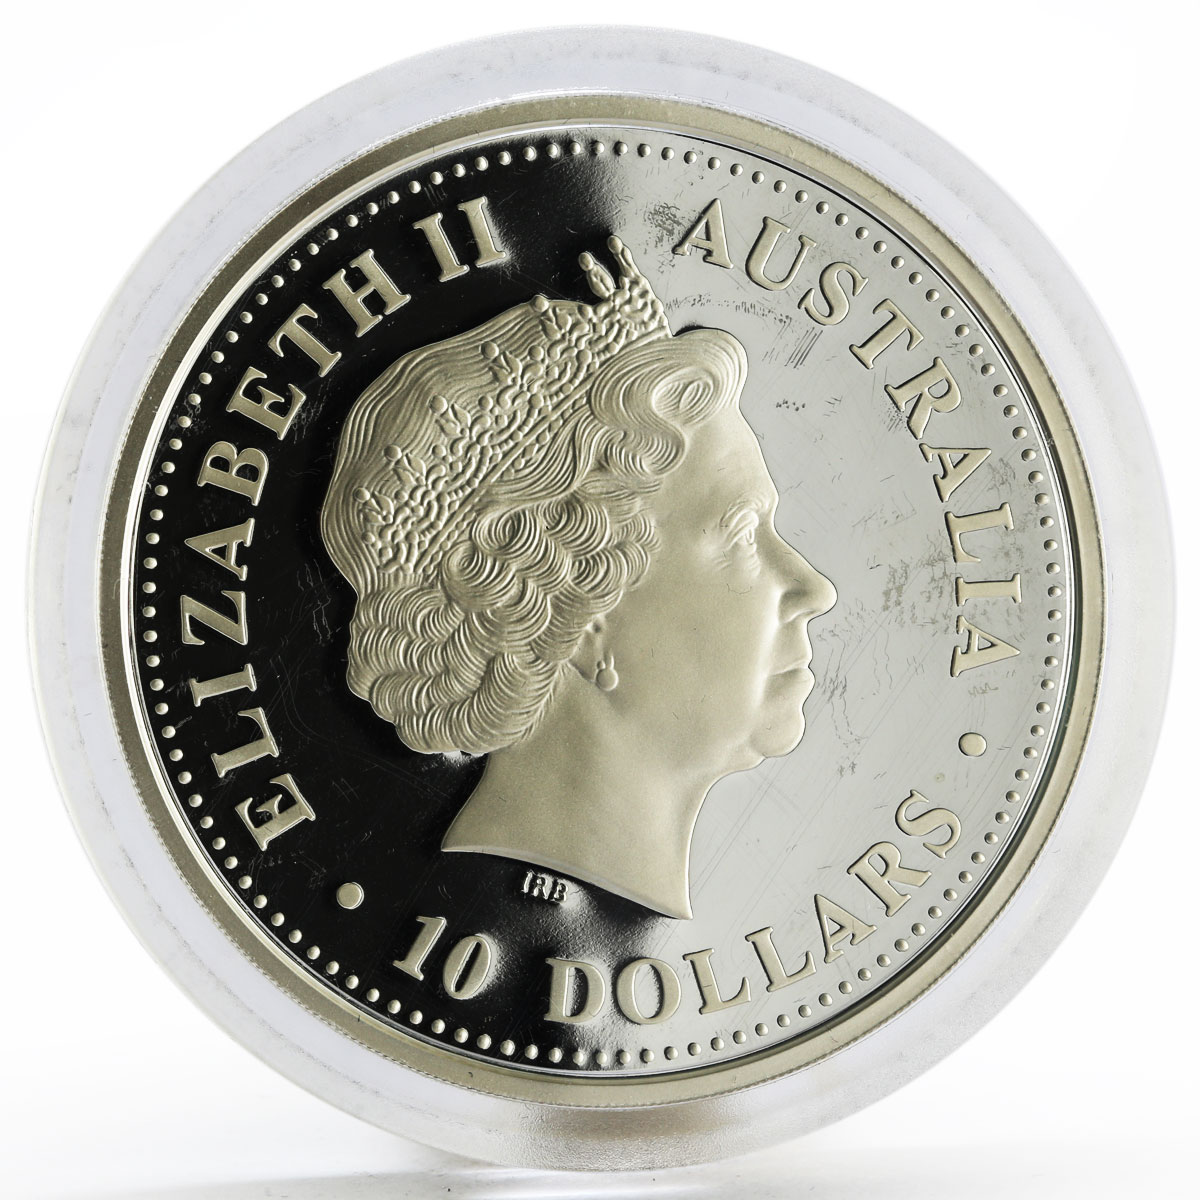 Australia 10 dollars Kookaburra Evolution of Knowledge proof silver coin 2005